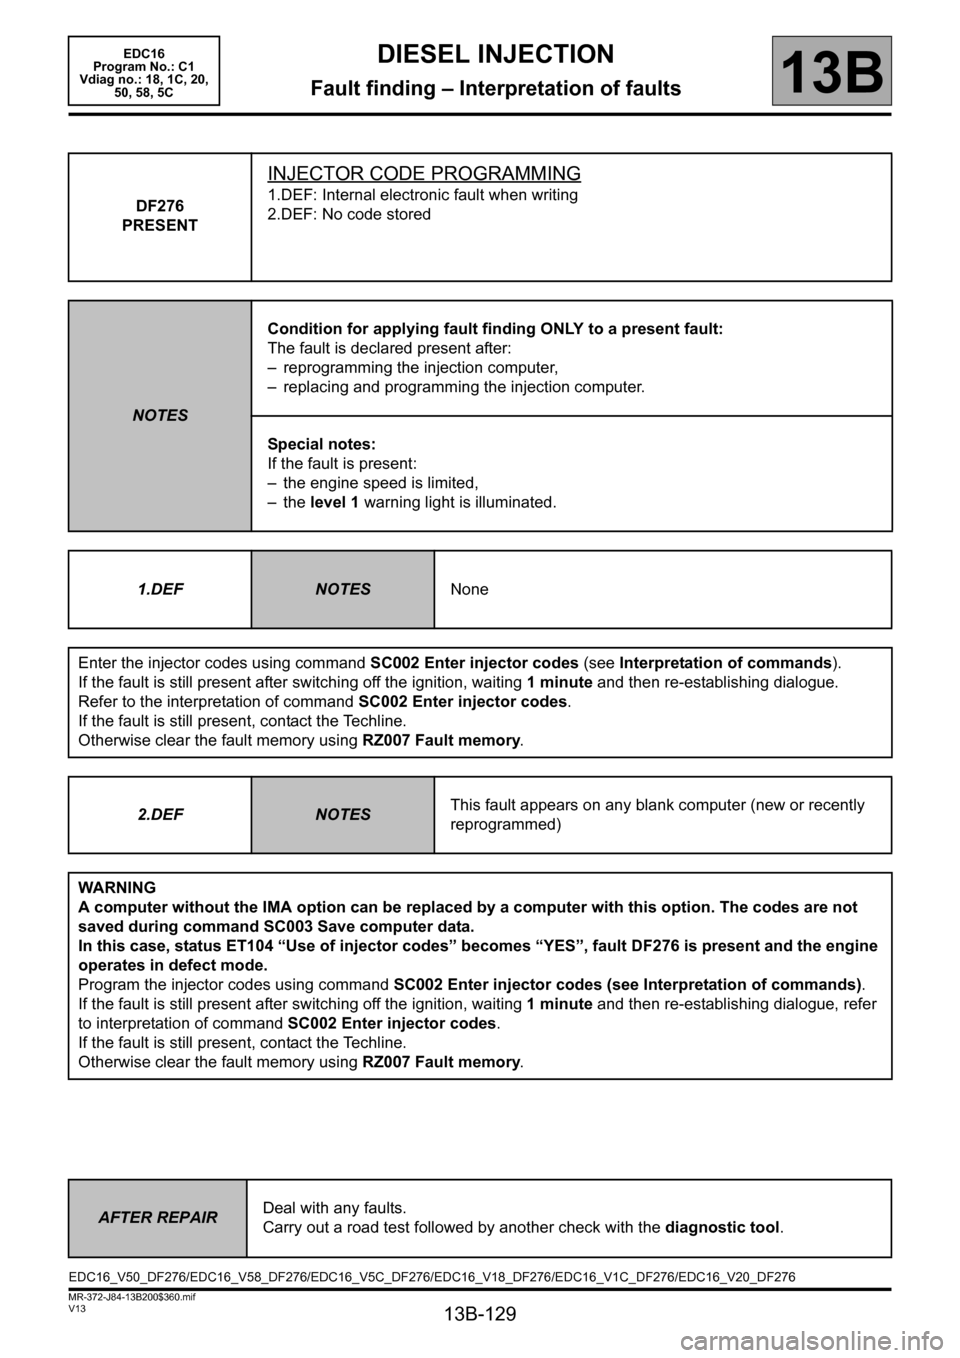 RENAULT SCENIC 2011 J95 / 3.G Engine And Peripherals EDC16 Workshop Manual 13B-129
MR-372-J84-13B200$360.mif
V13
DIESEL INJECTION
Fault finding – Interpretation of faults
EDC16  
Program No.: C1 
Vdiag no.: 18, 1C, 20,  
50, 58, 5C
13B
DF276
PRESENT
INJECTOR CODE PROGRAMMI